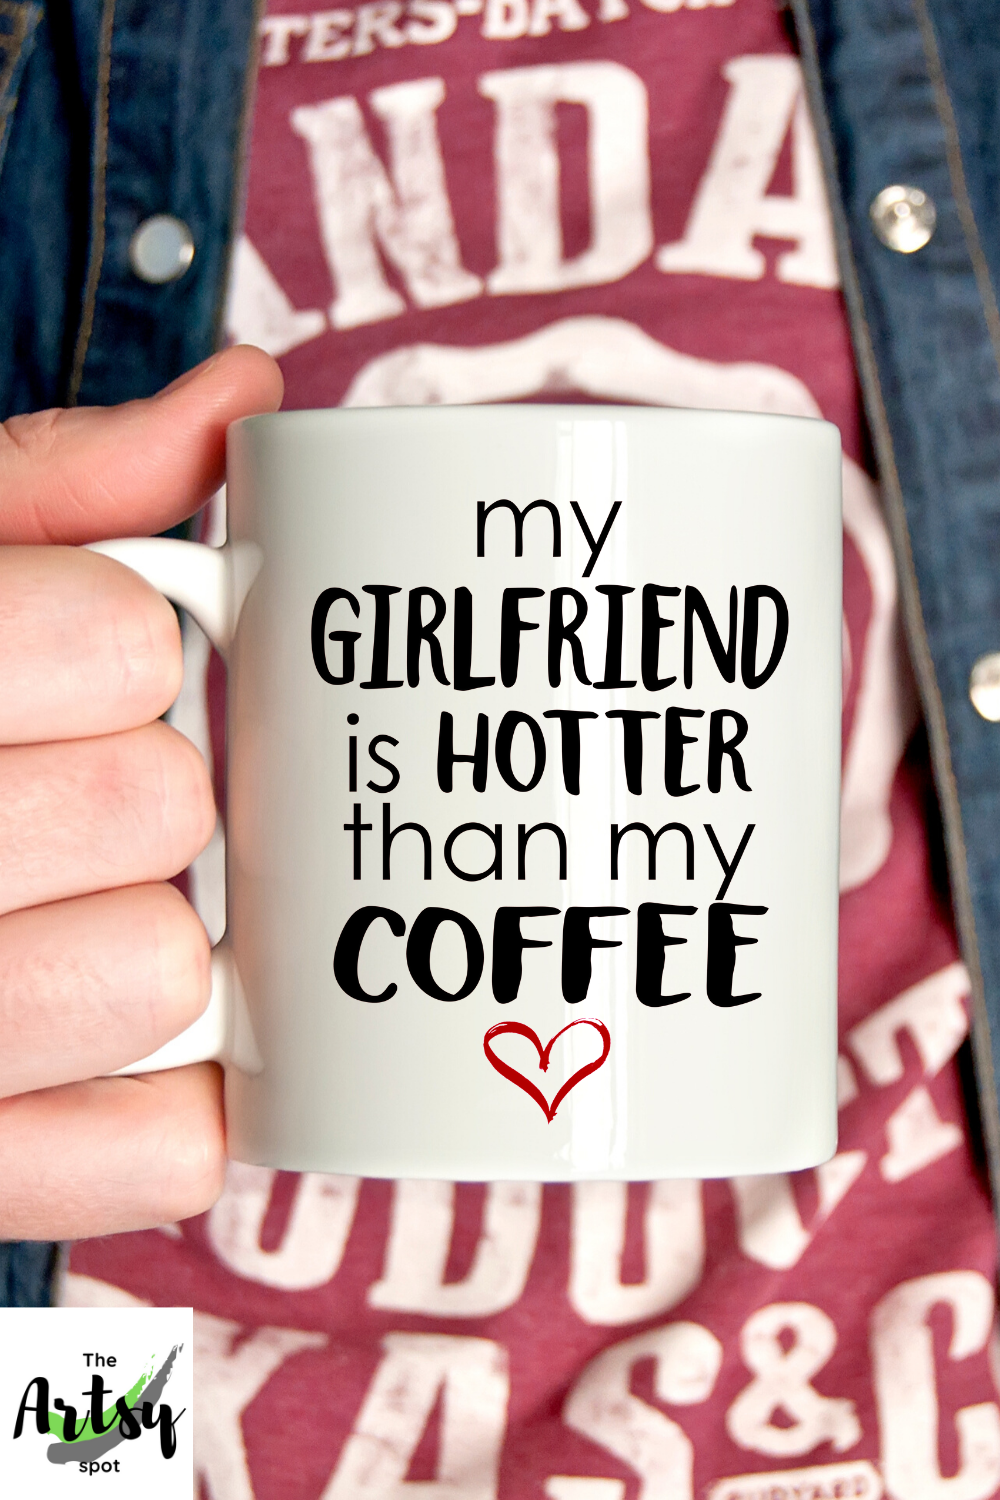 I Like My Coffee Hot Just Like My Boyfriend / Girlfriend Mug Set